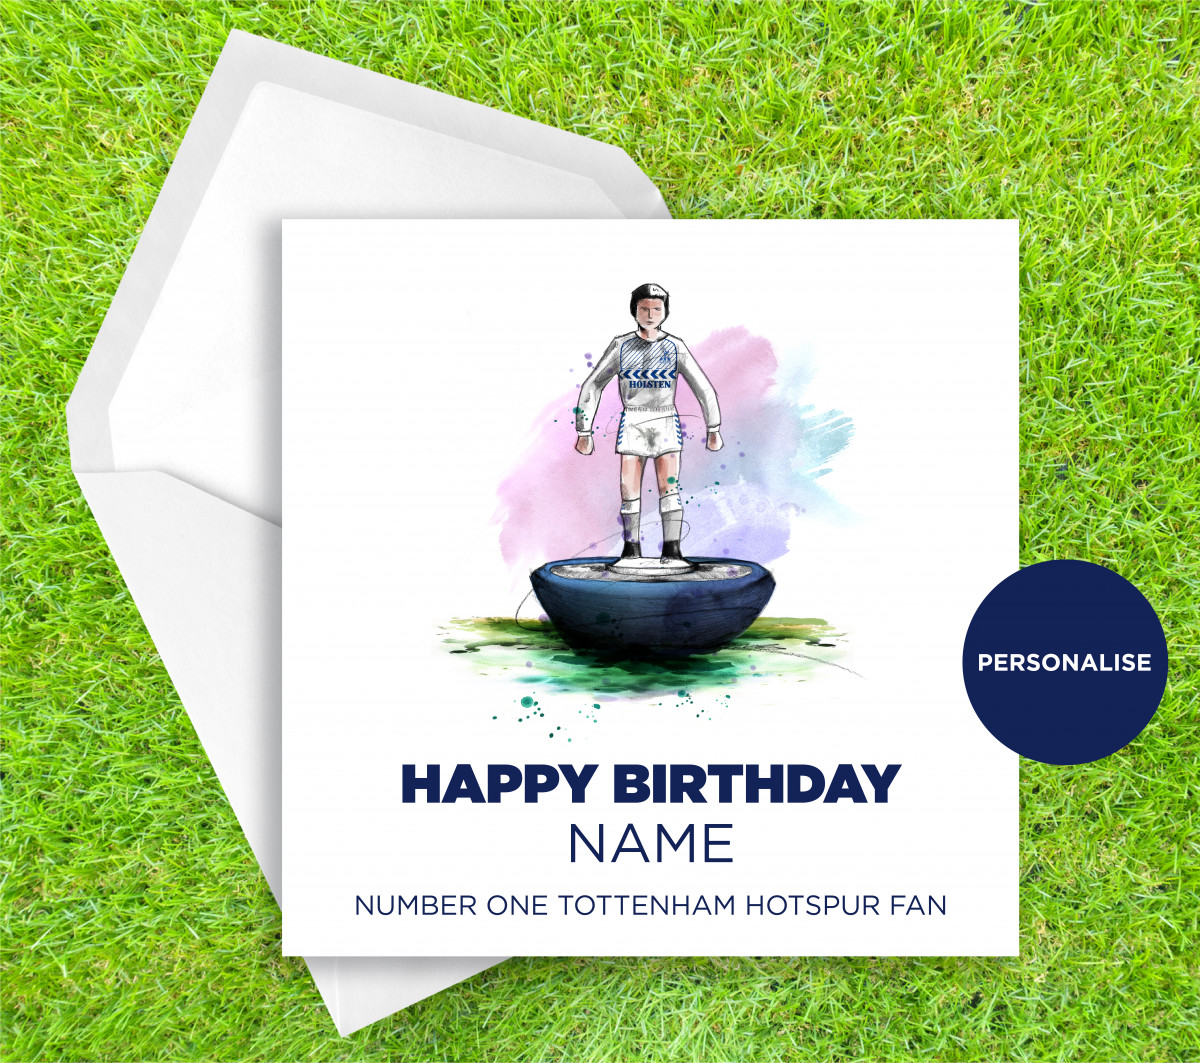 Tottenham Hotspur, Subbuteo, personalised birthday card